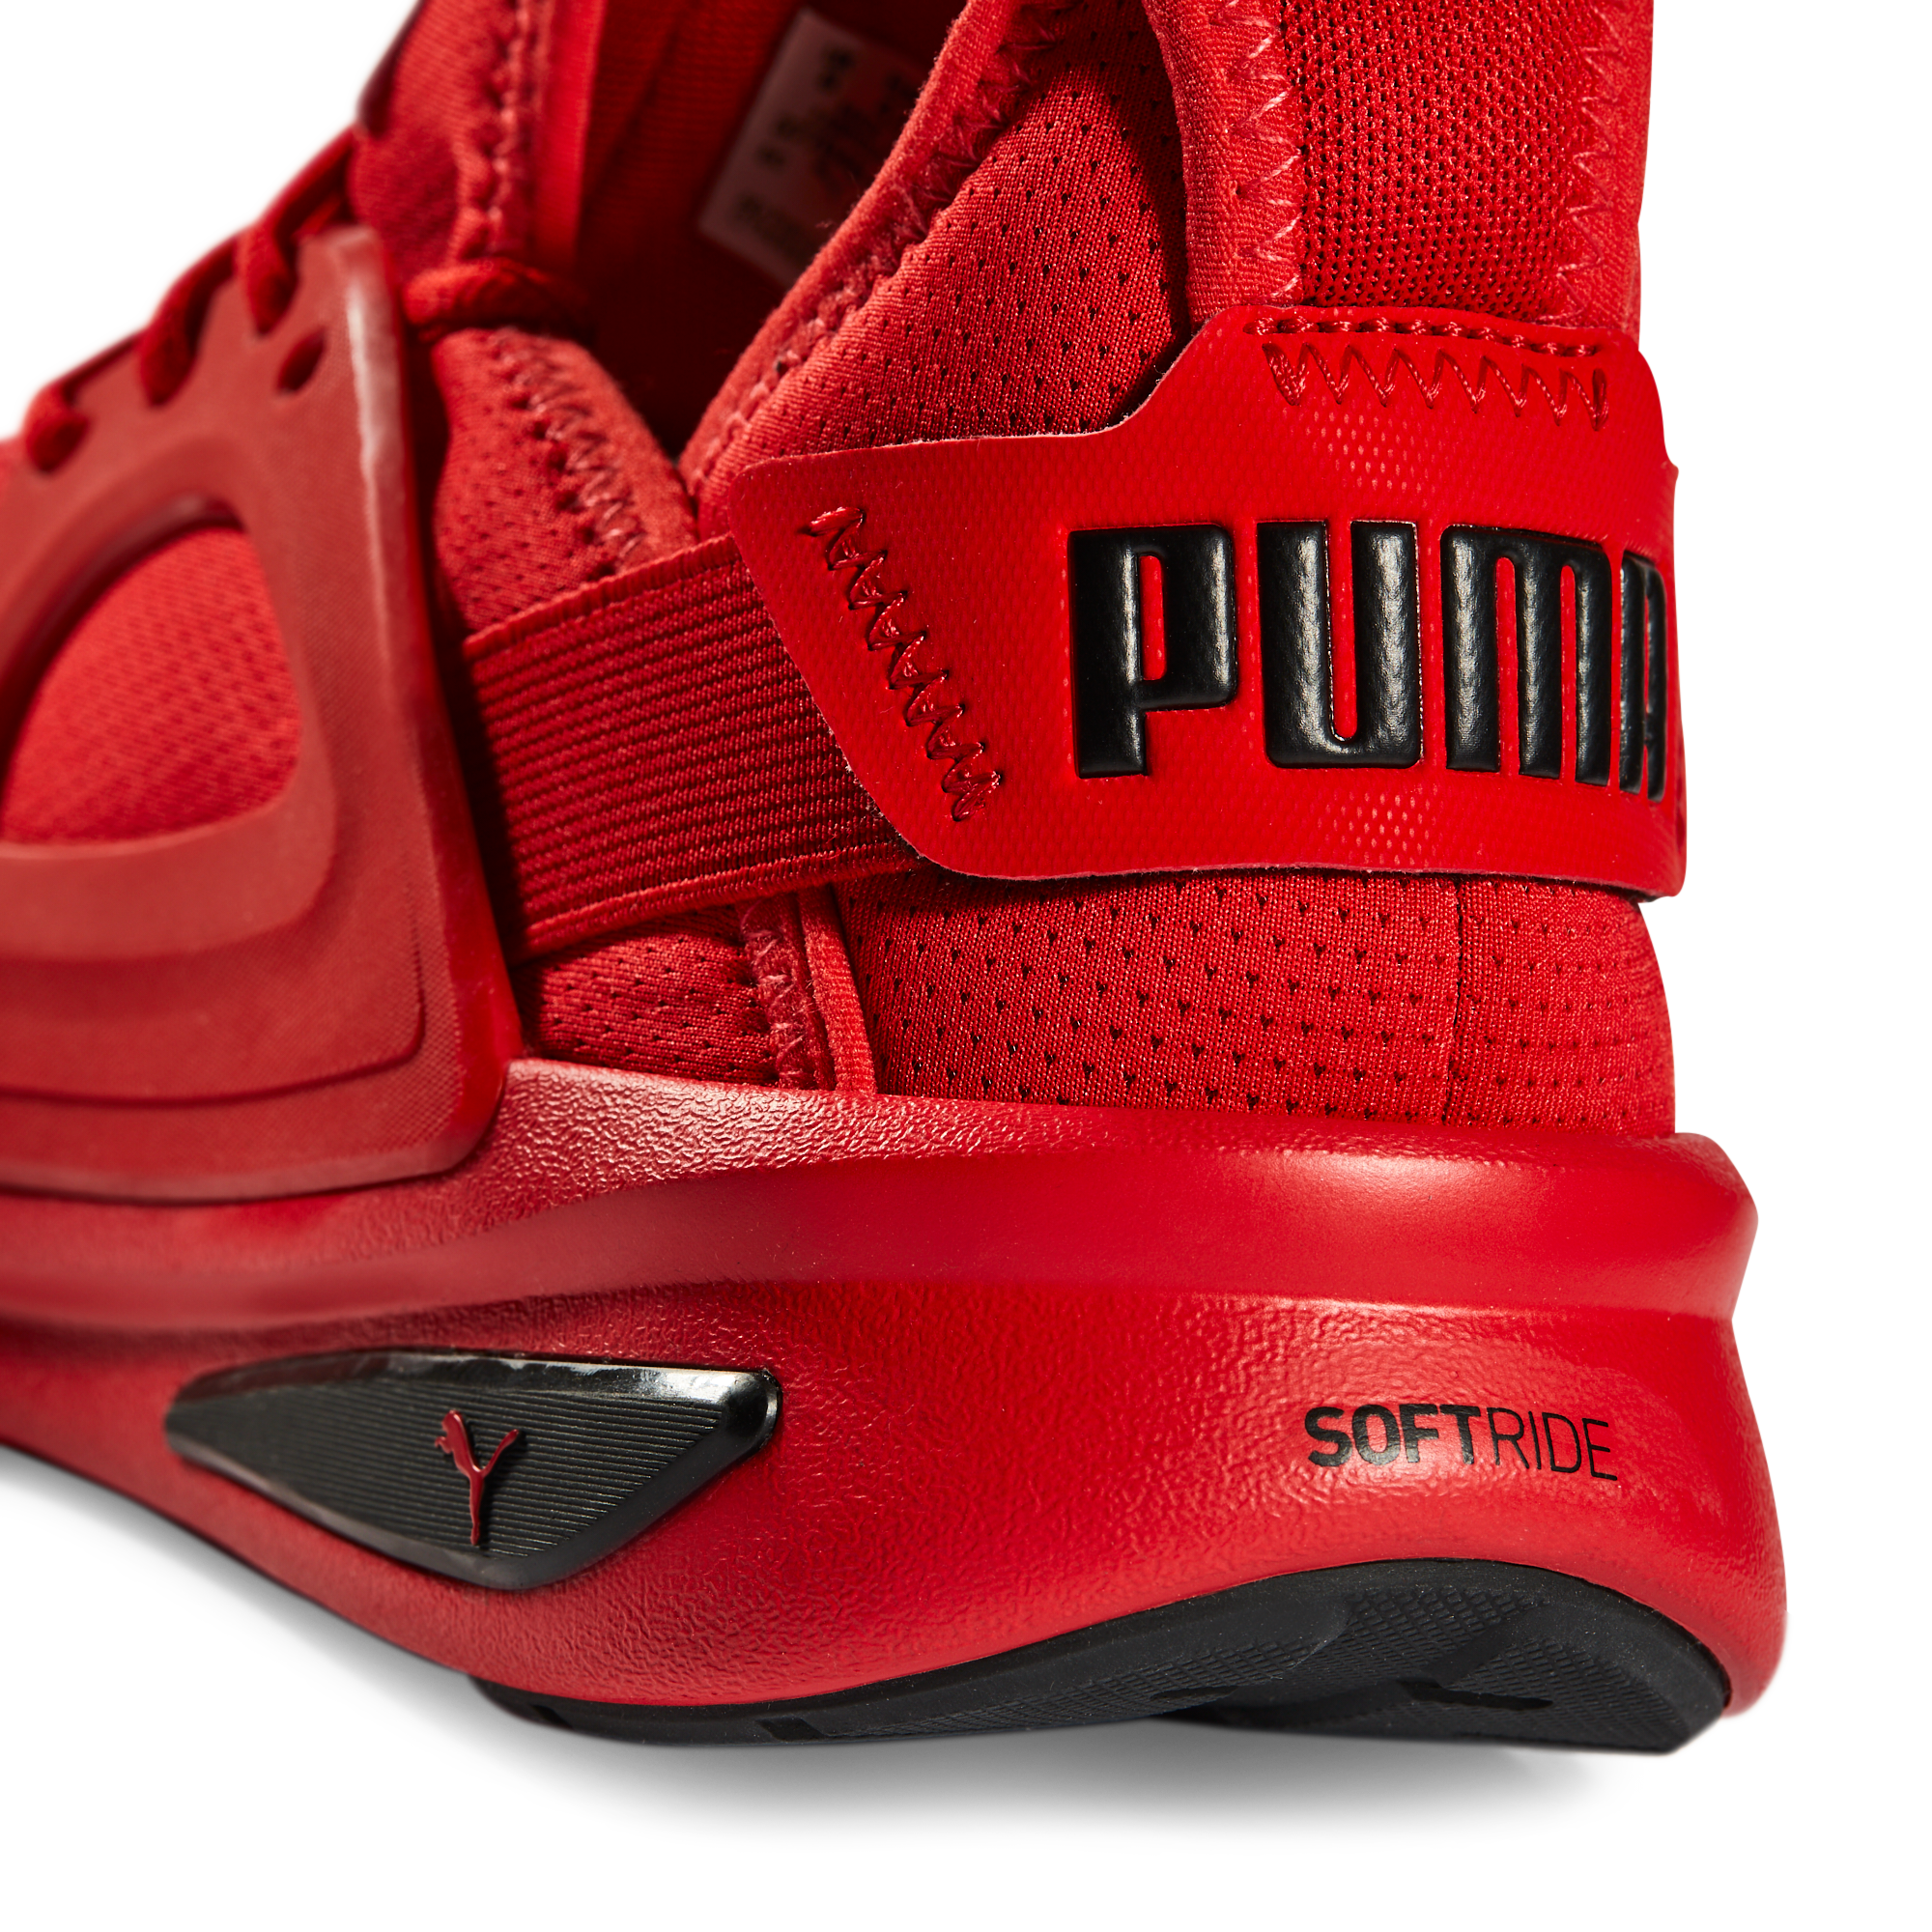 Softride Enzo Evo 4 / High Risk Red-Puma Black